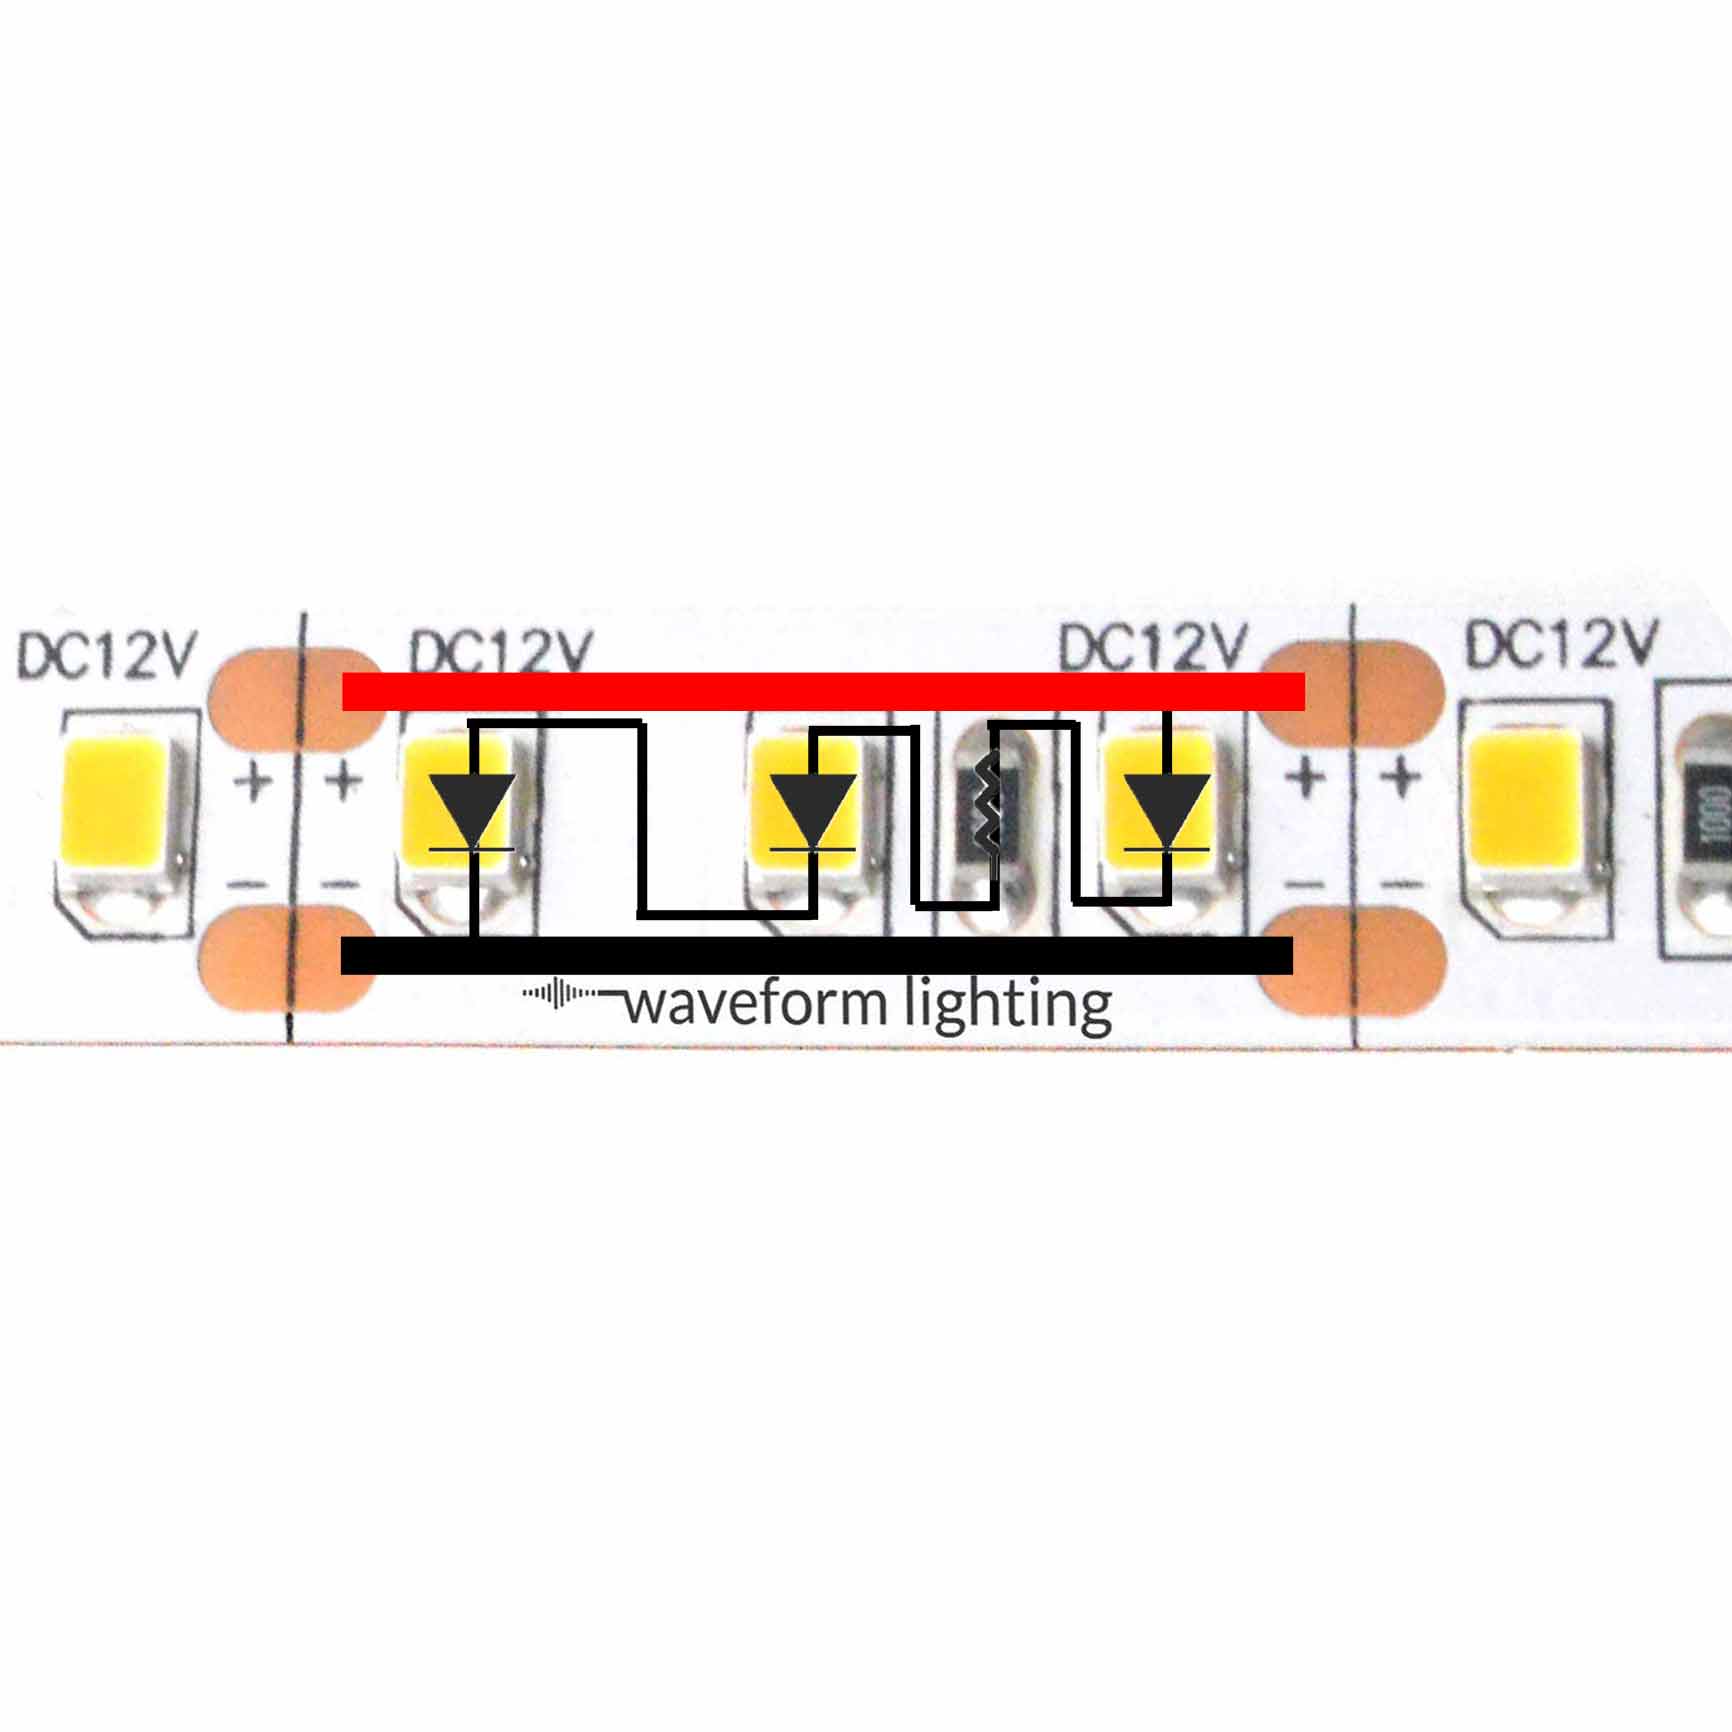 LED Strip Light Internal Schematic and Information | Waveform Lighting